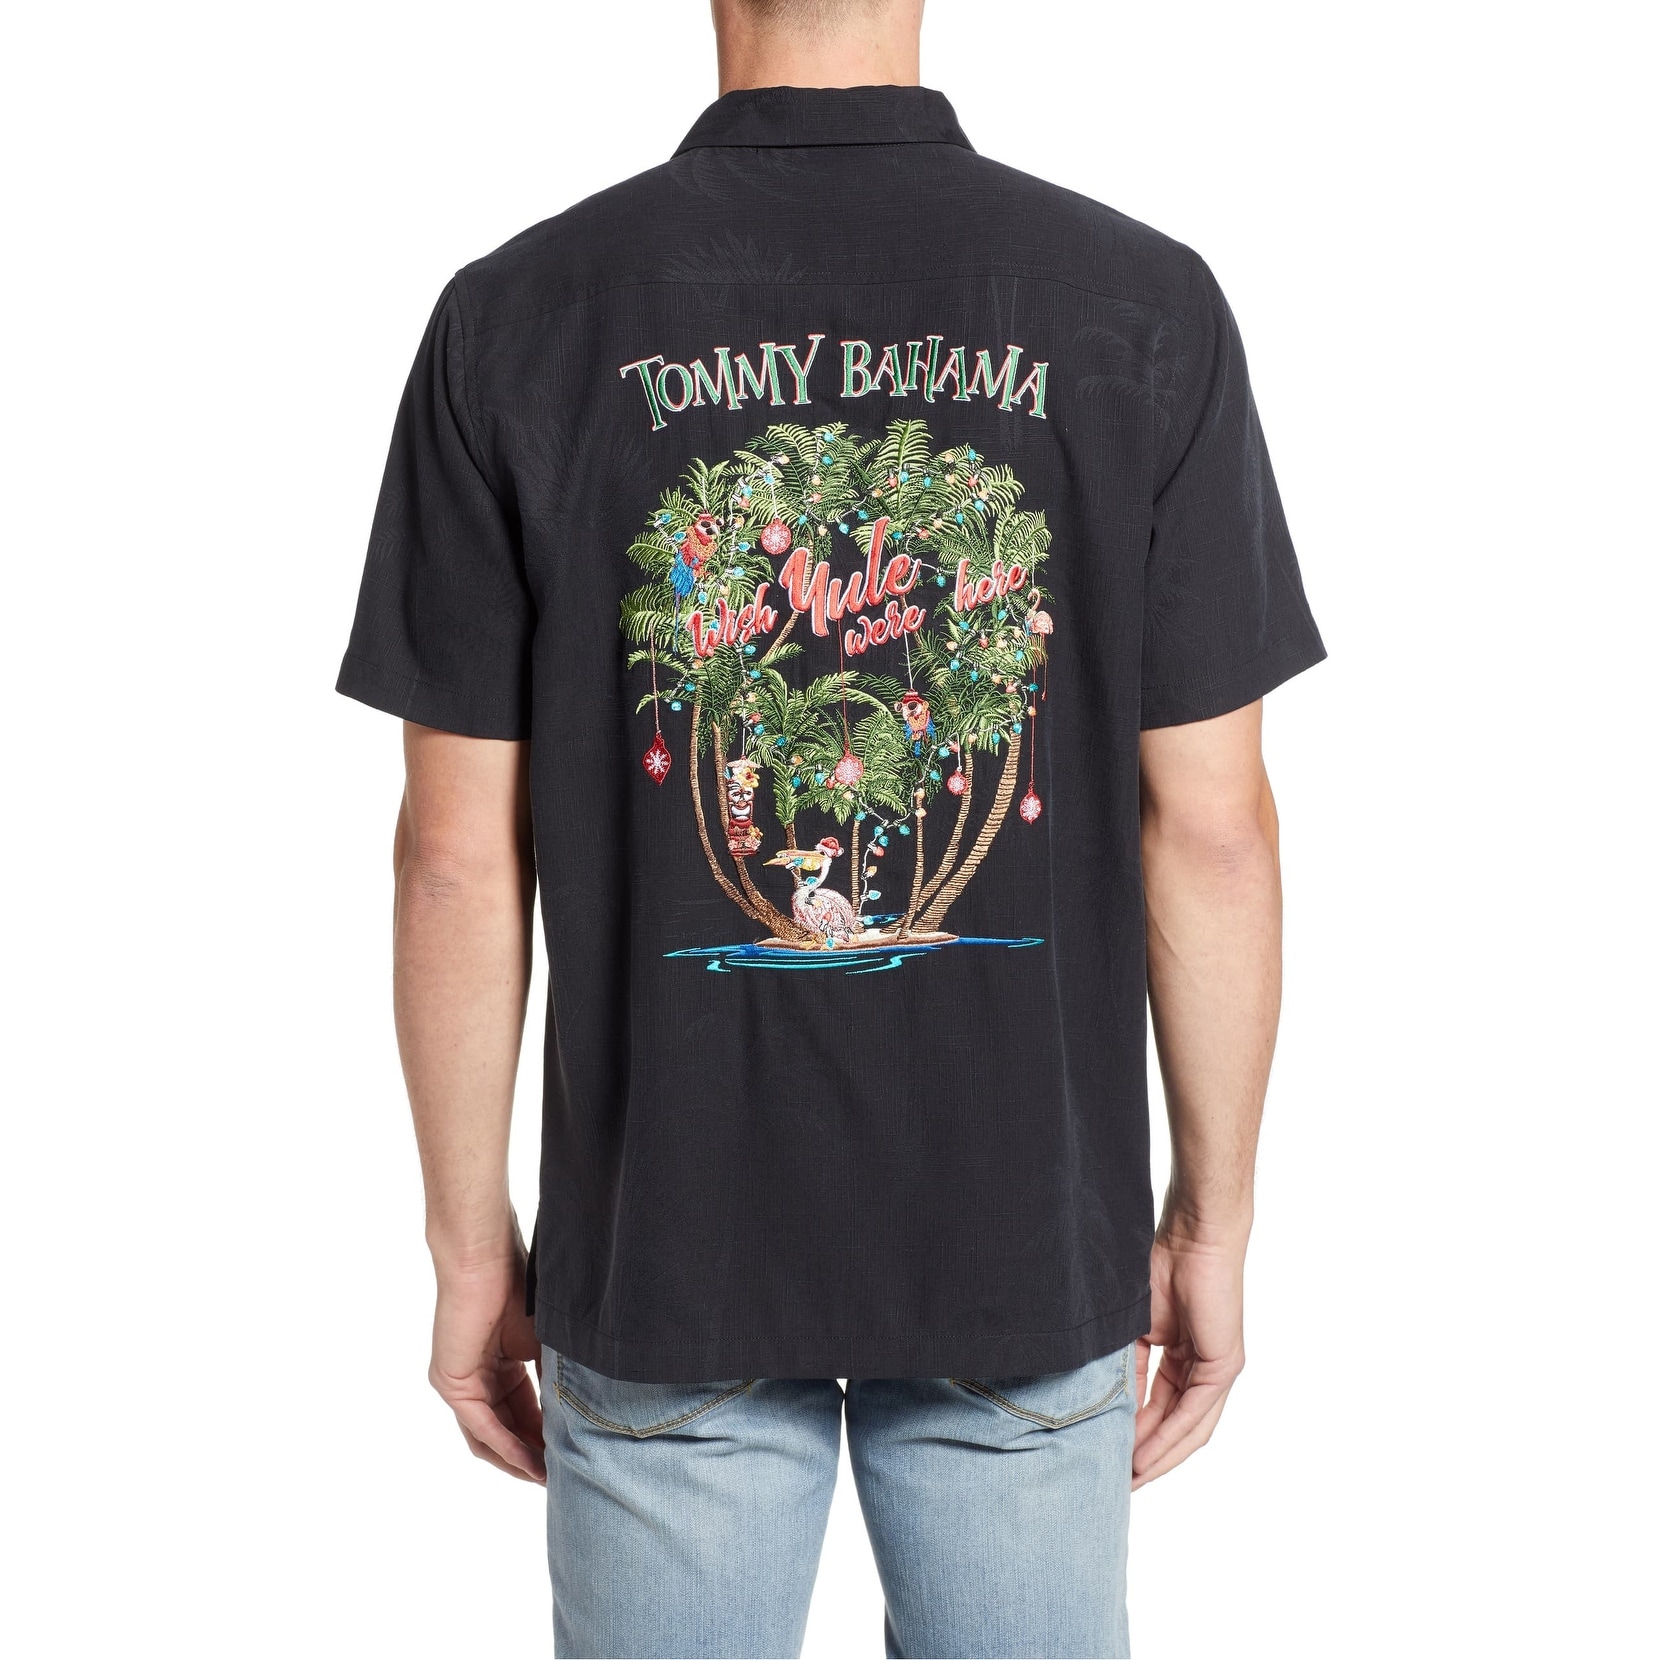 tommy bahama 4xl shirts Cheaper Than 